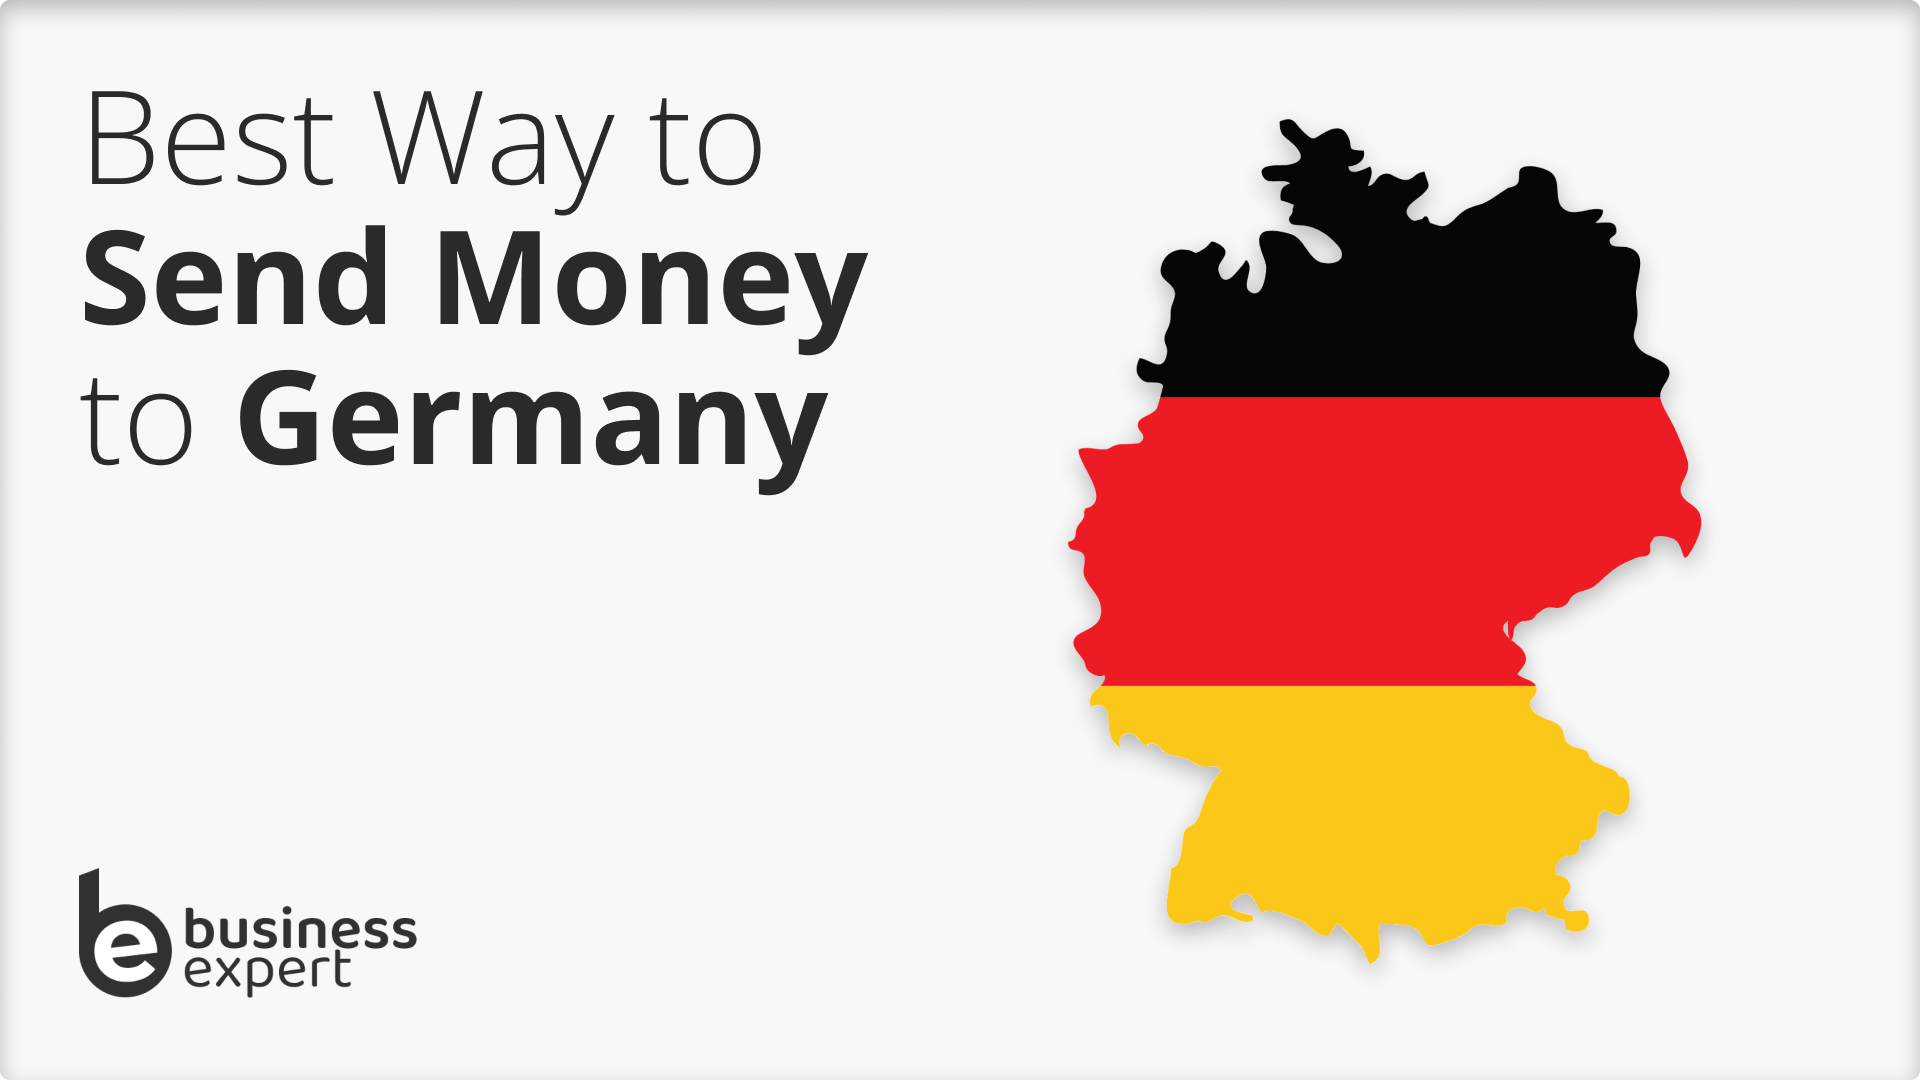 Send Money to Germany